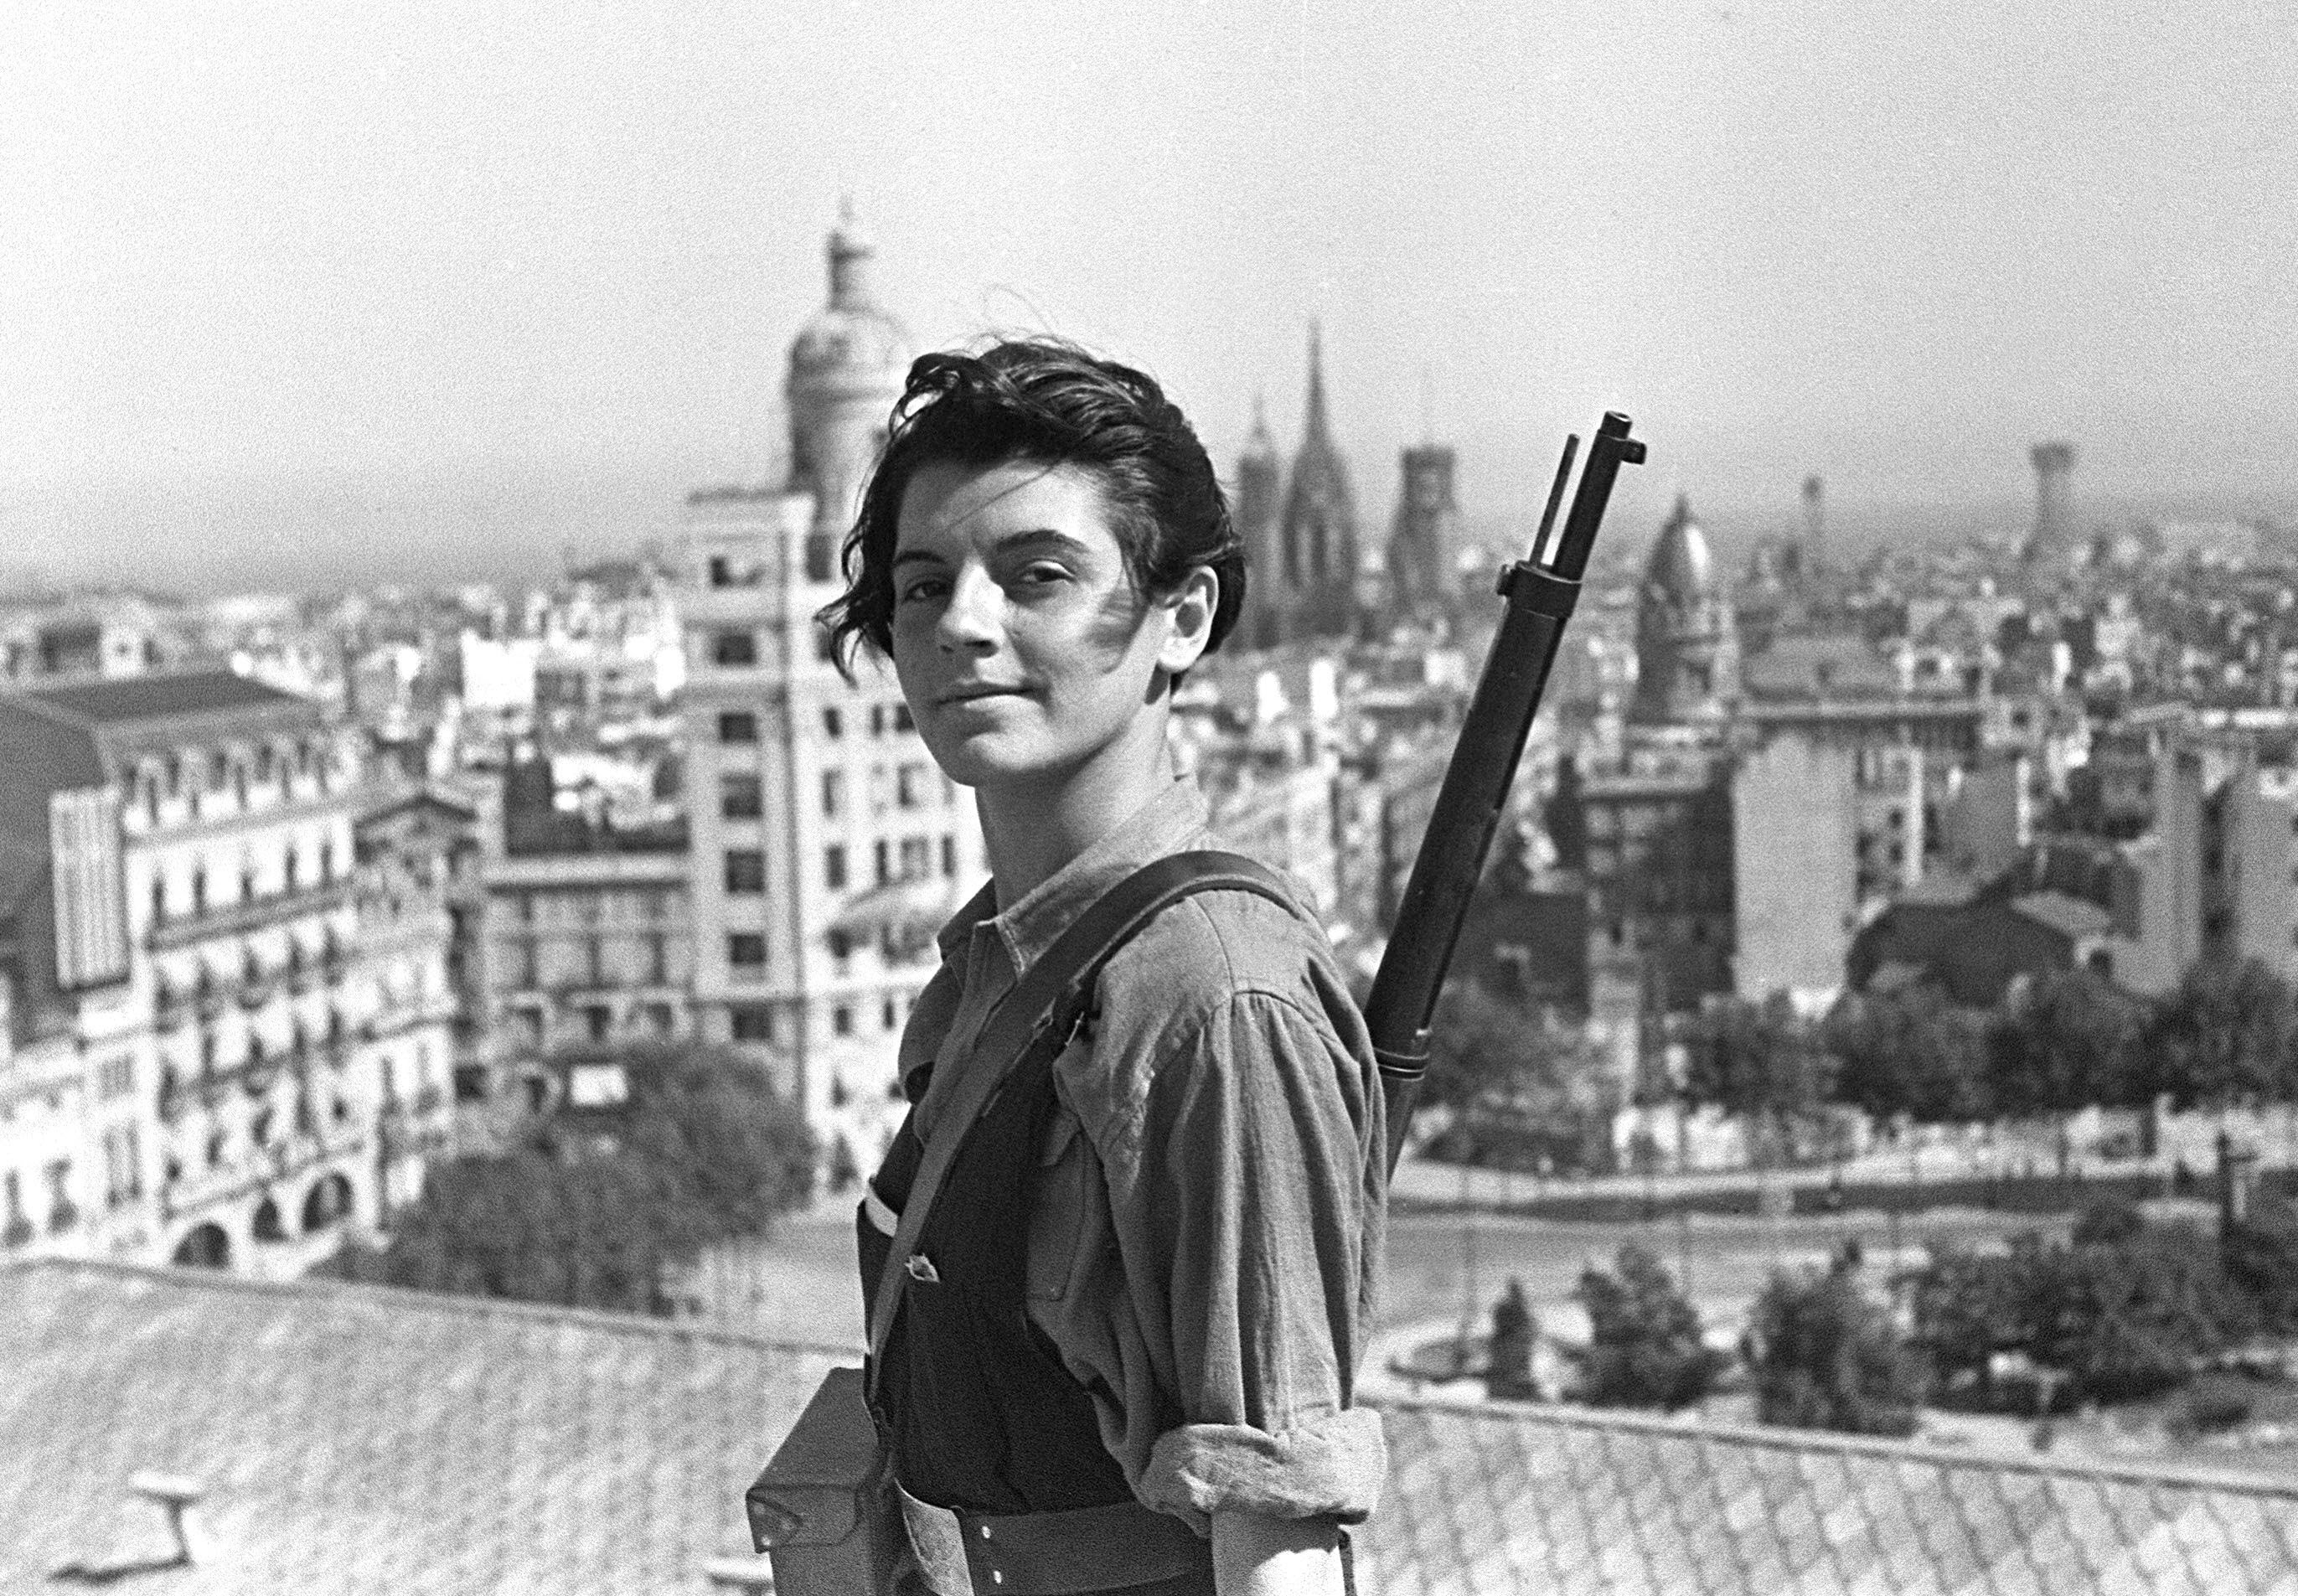 People 2743x1905 Barcelona old photos anarchism socialism women monochrome